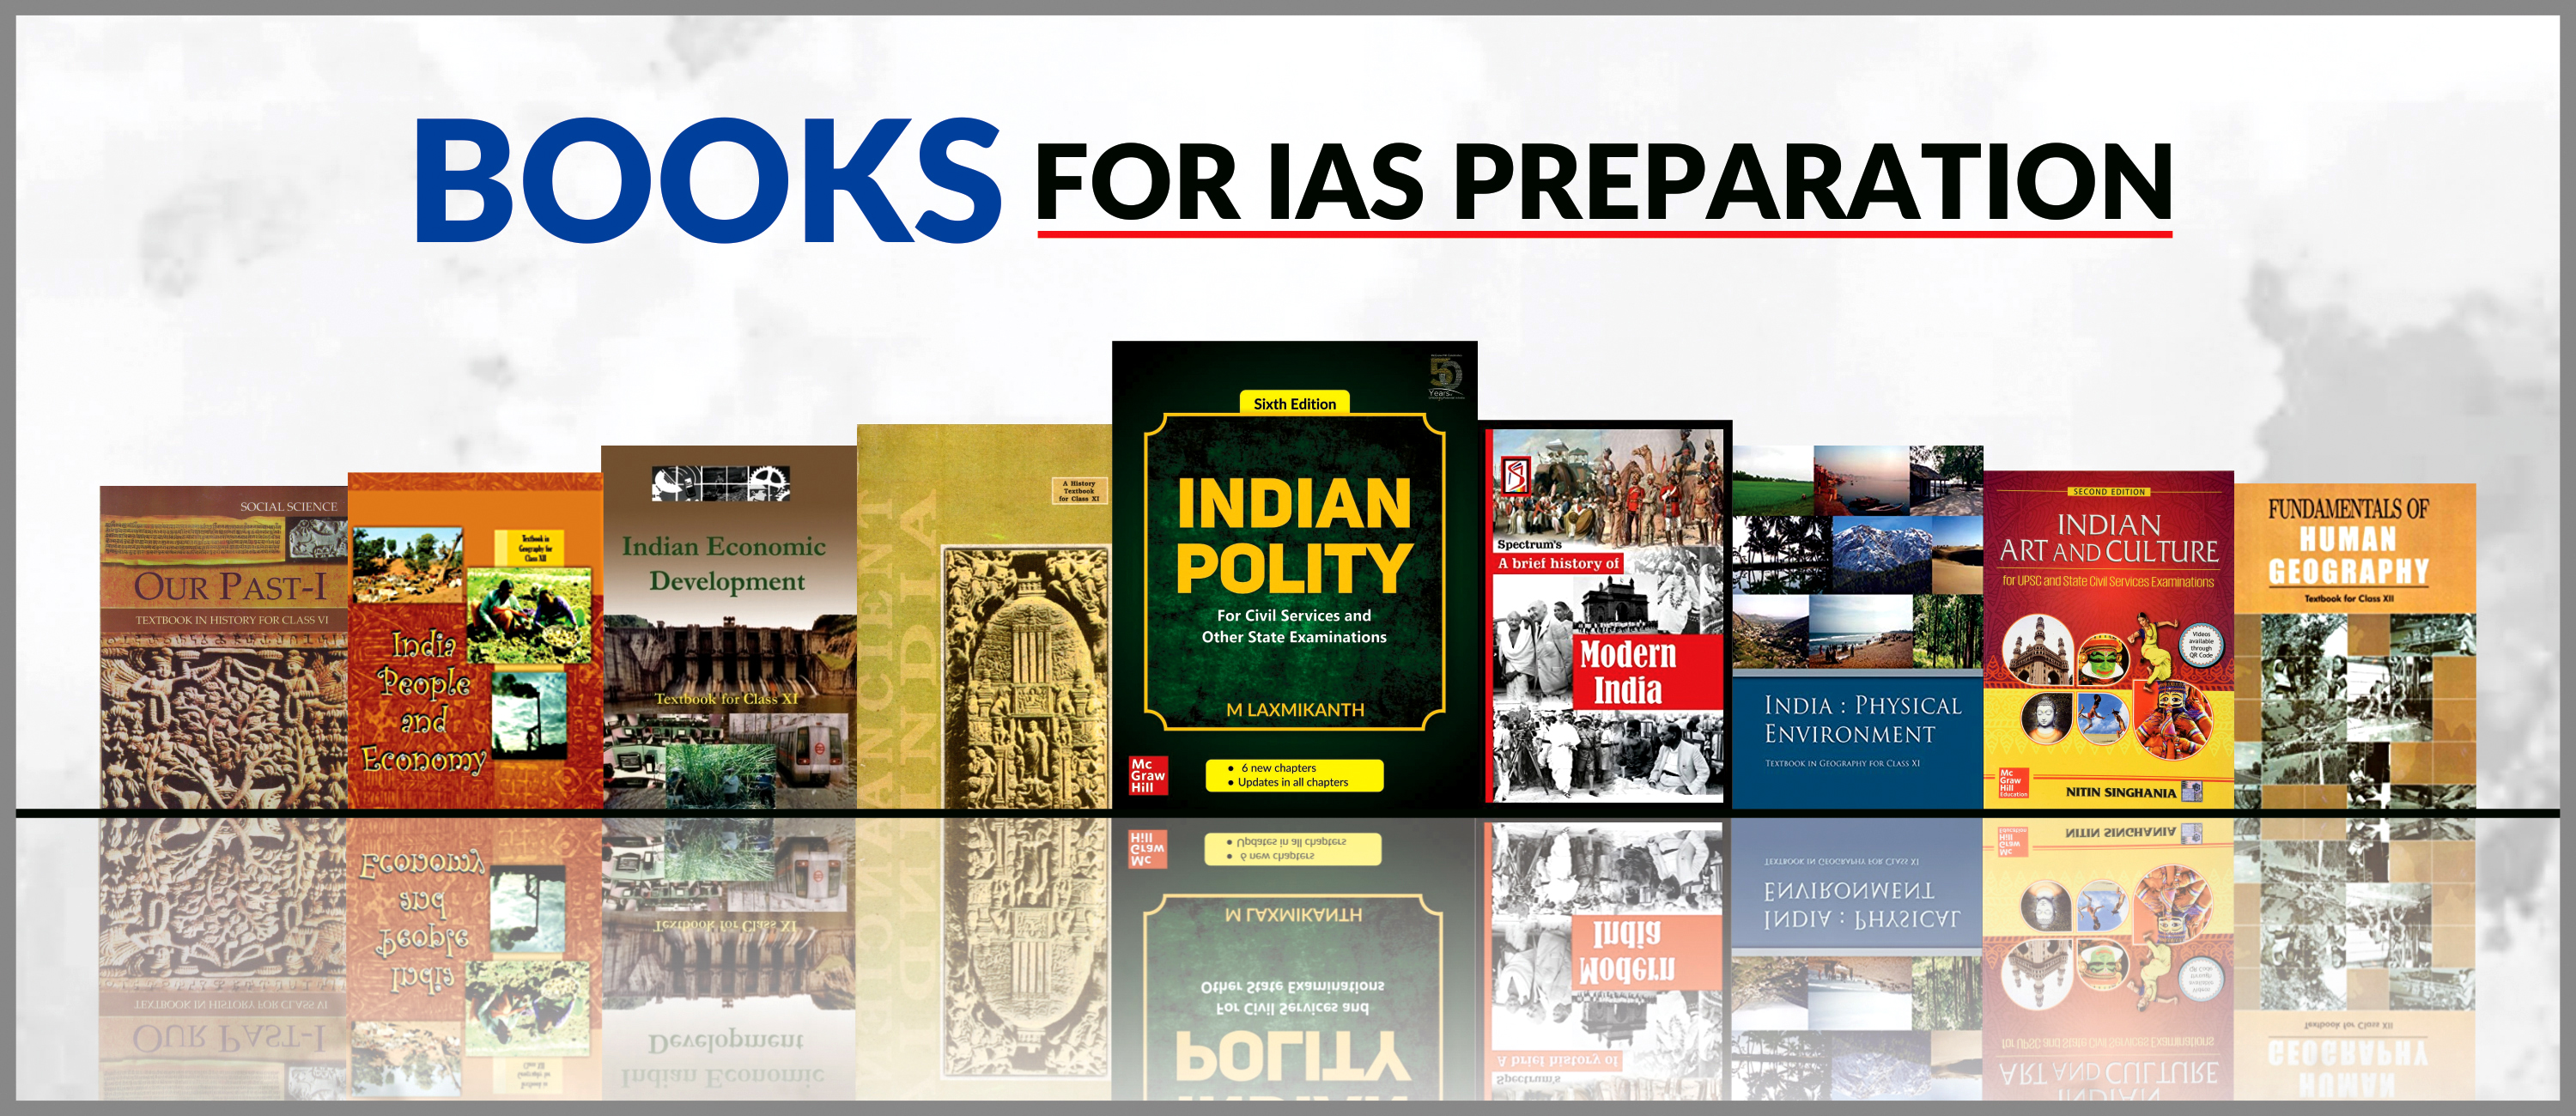 BEST BOOKS FOR IAS PREPARATION